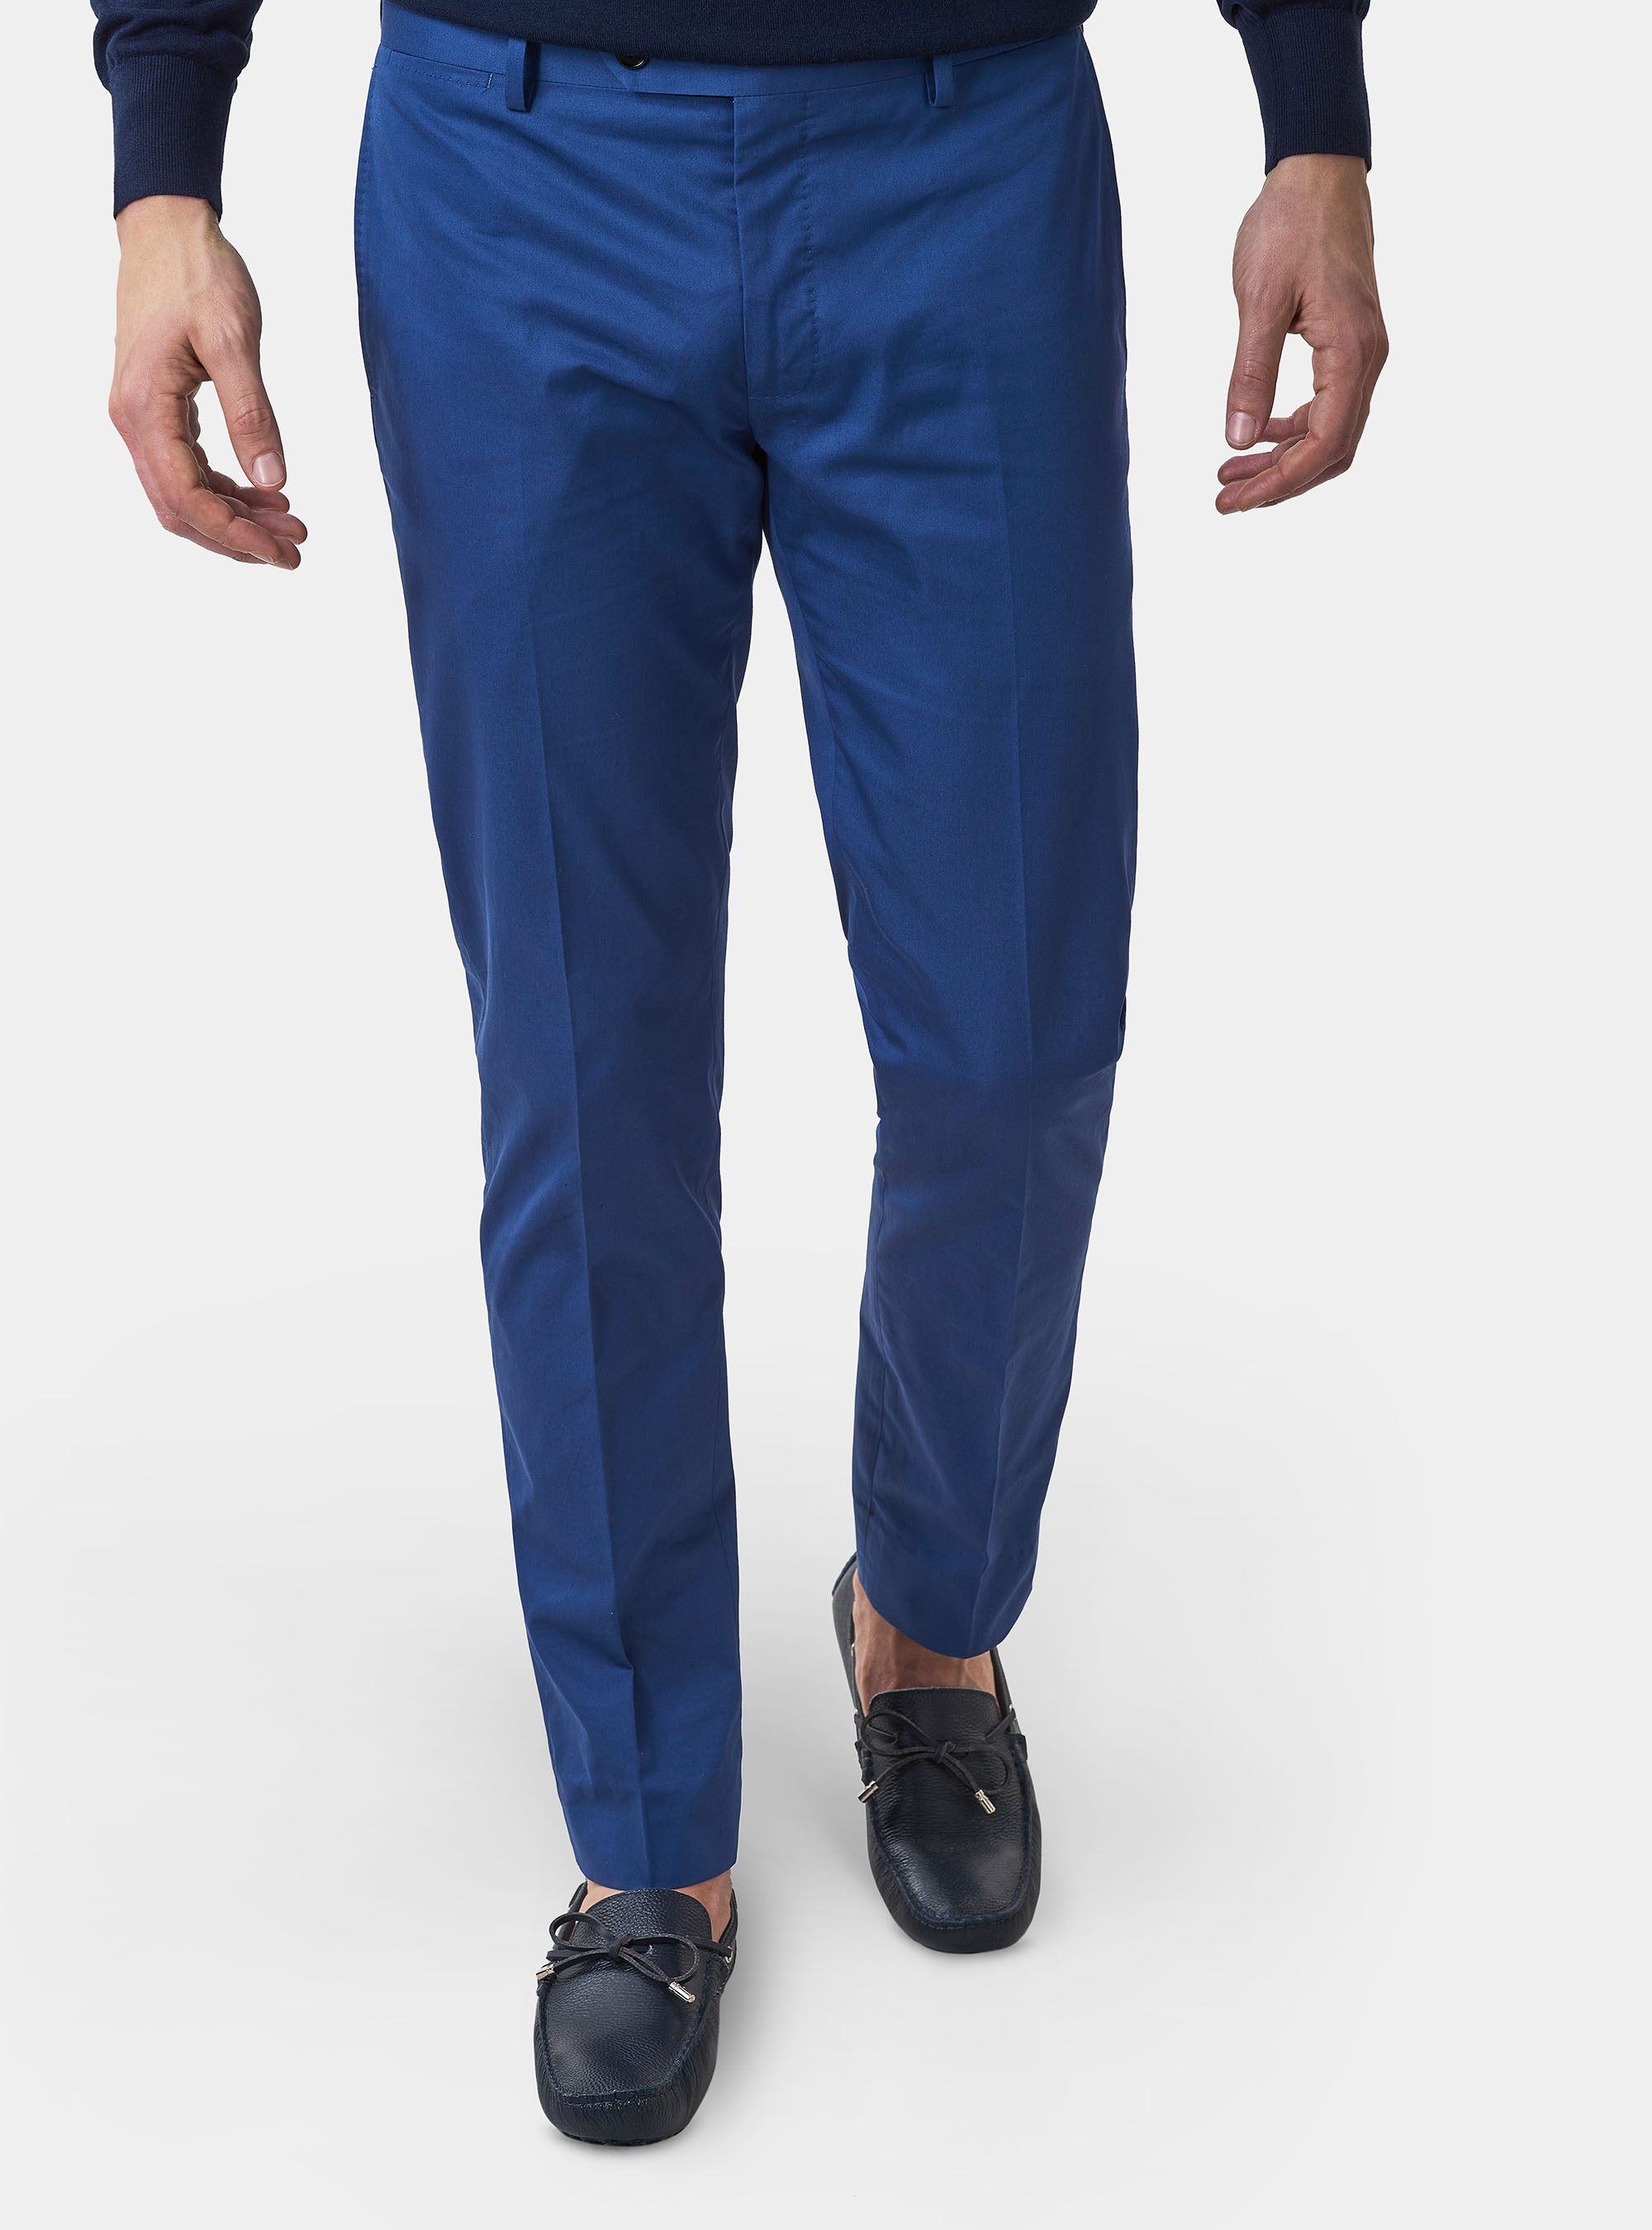 Cotton suit trousers | GutteridgeEU | Suits Uomo